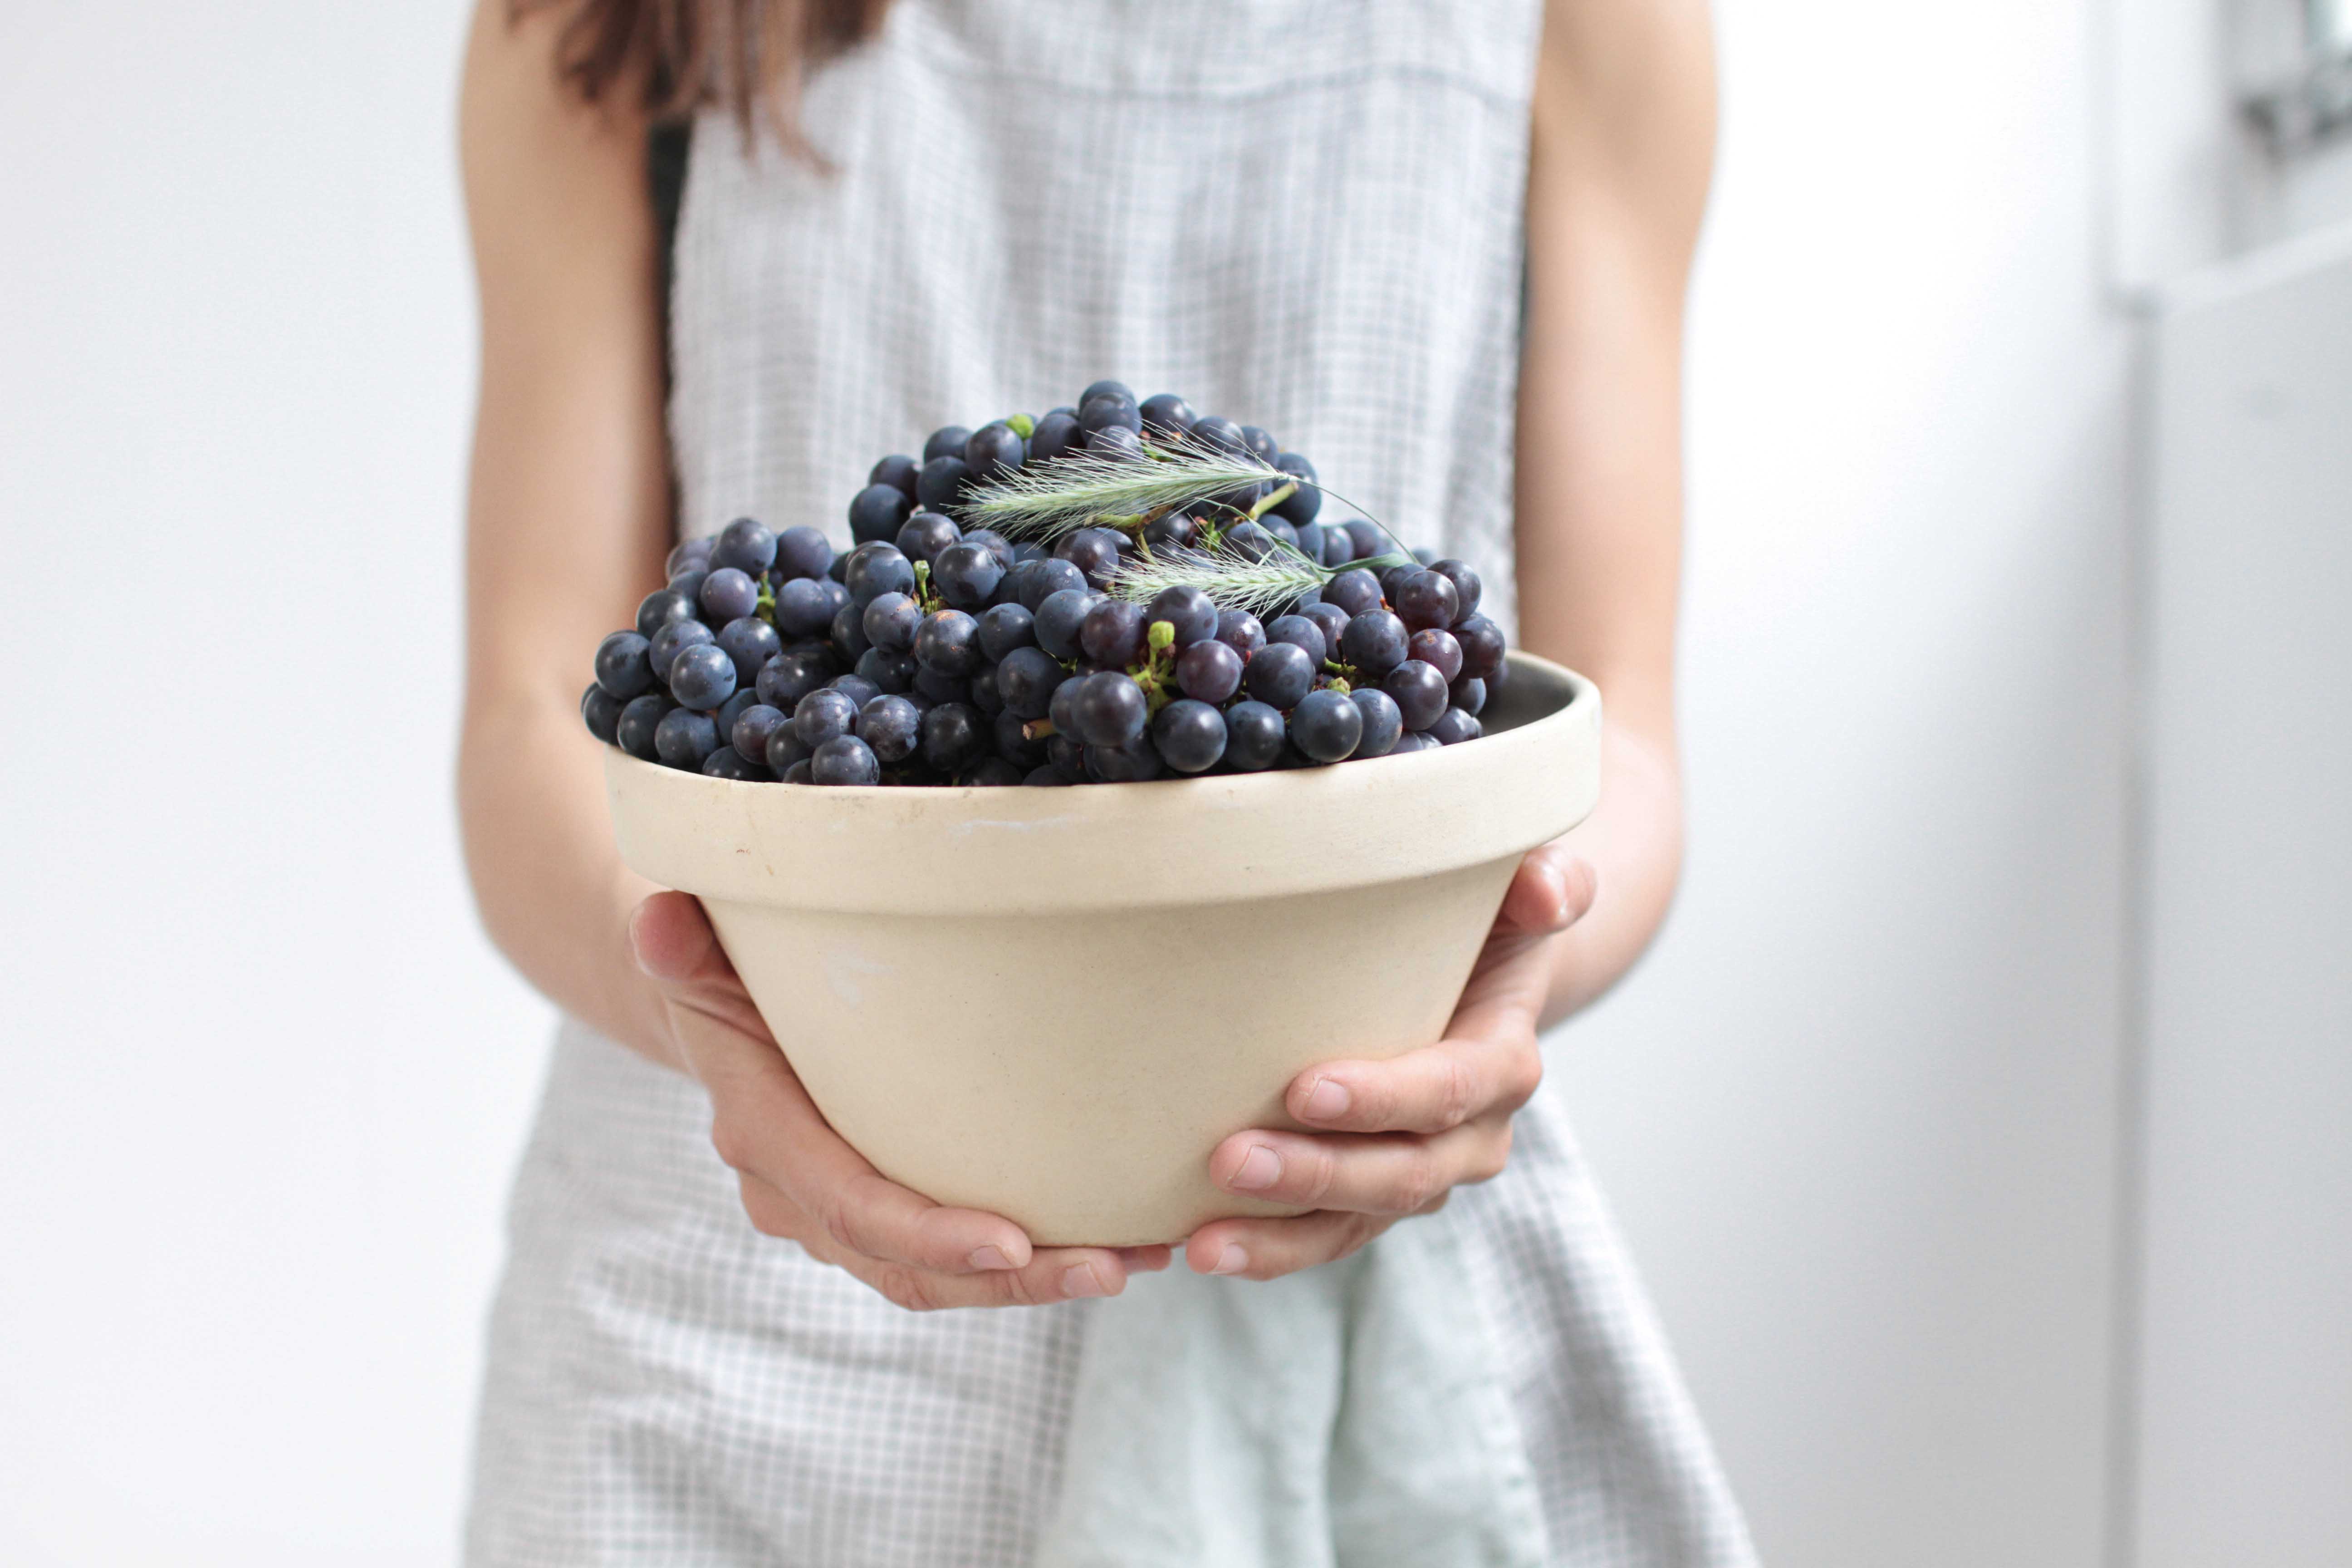 kyra holding grapes studiospacekyra